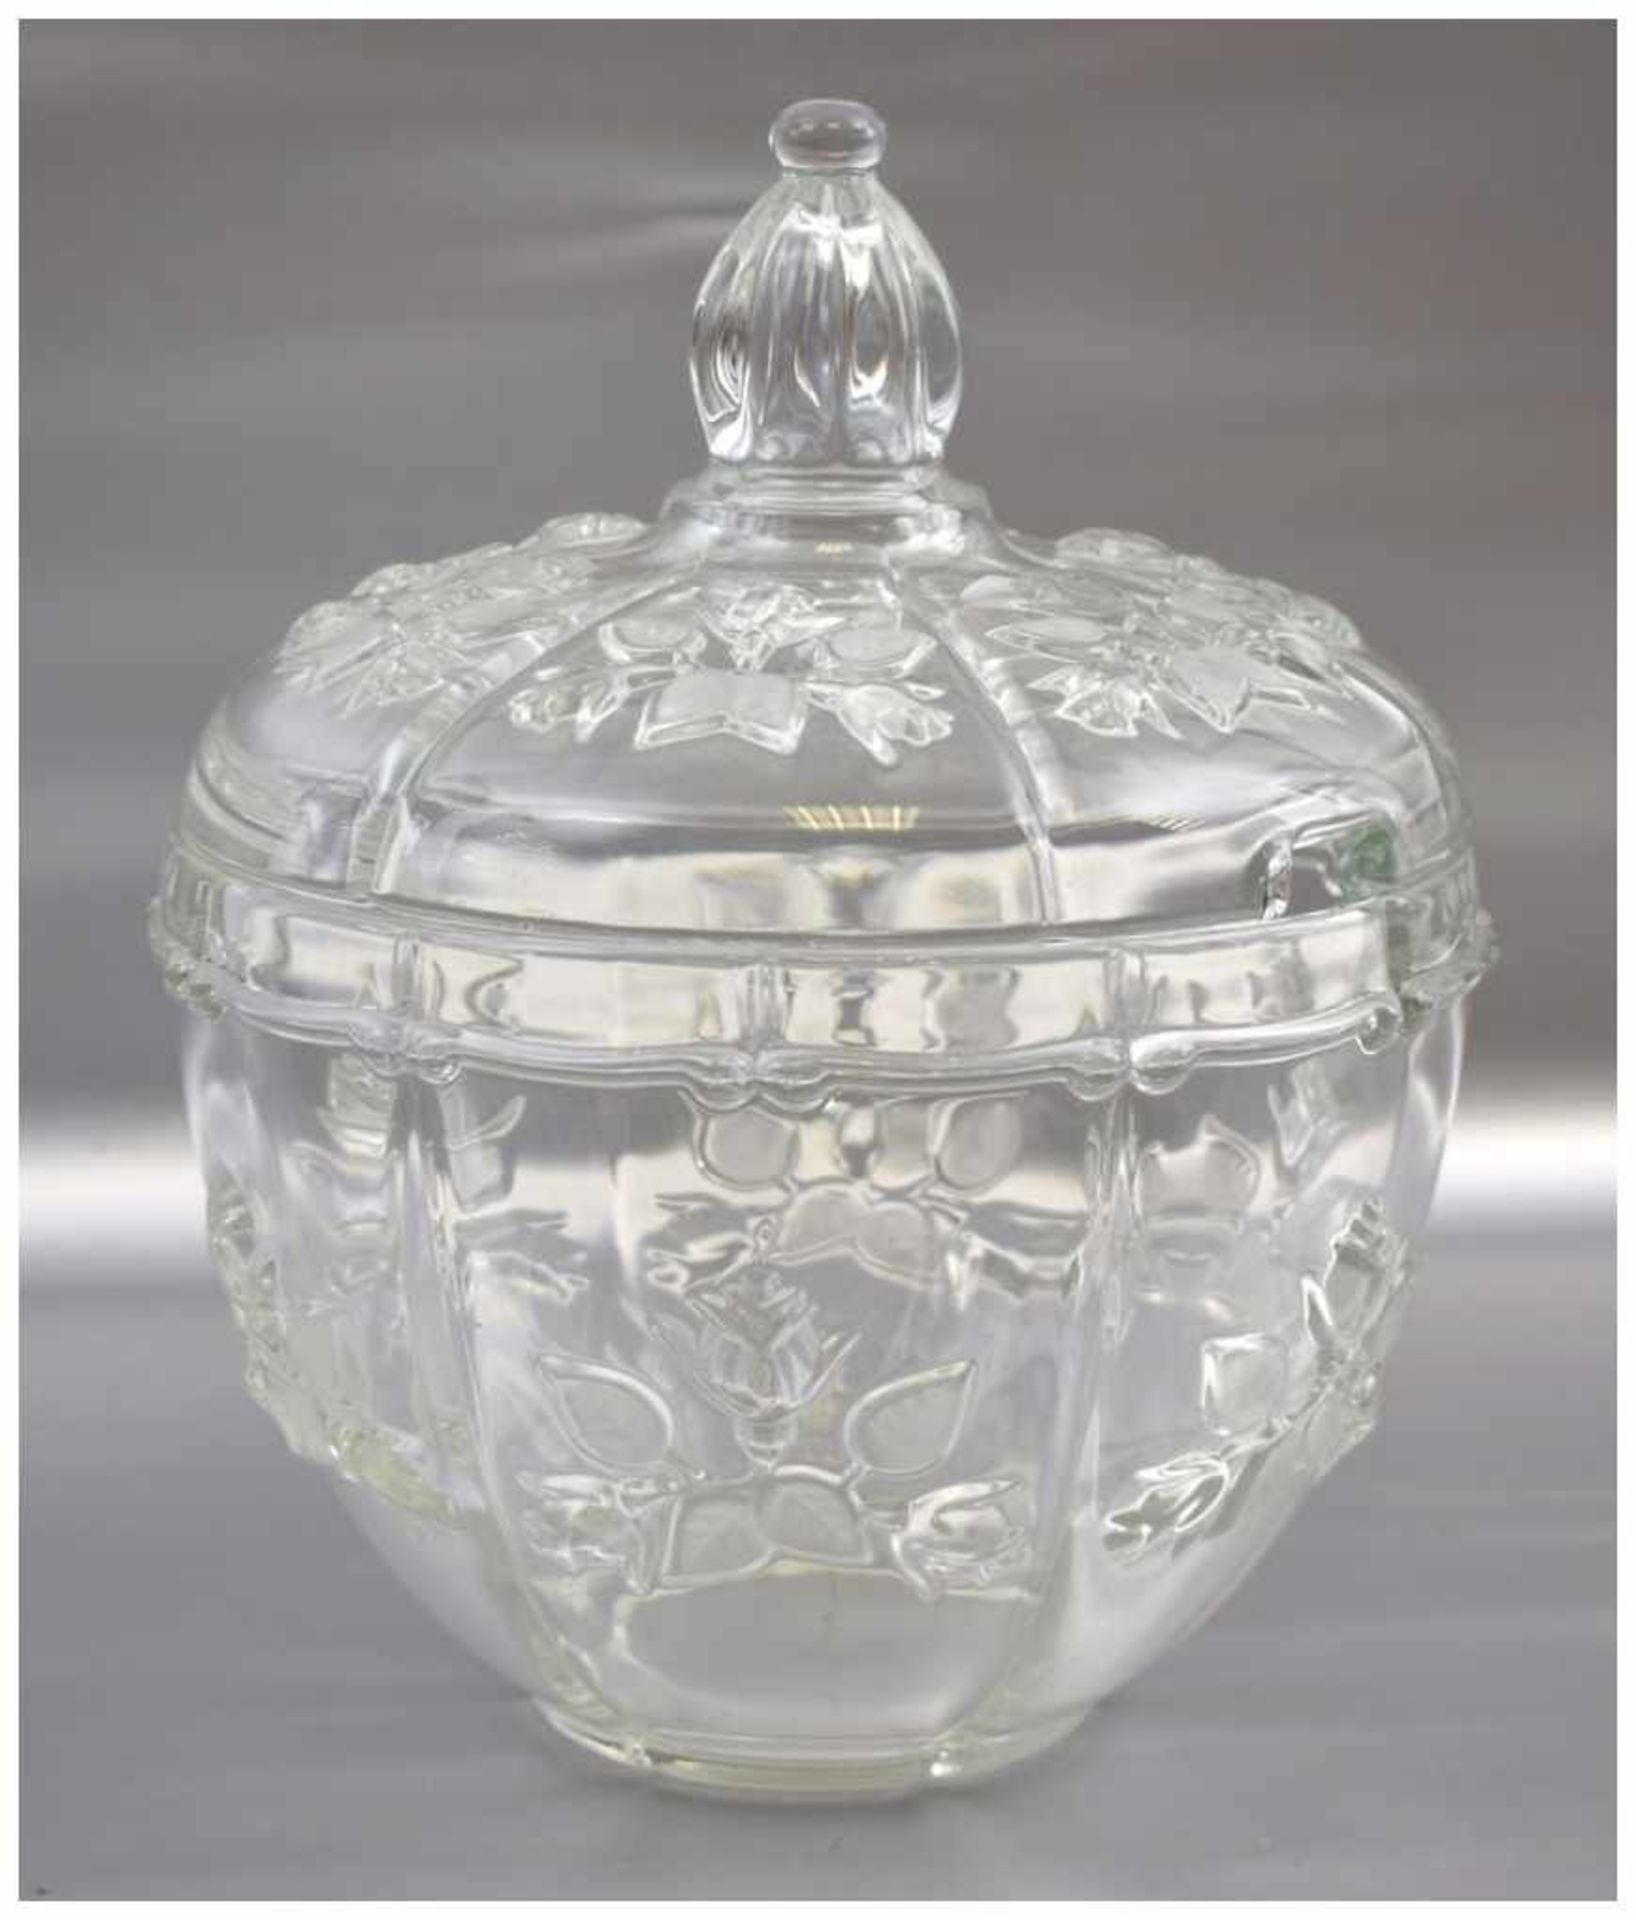 Bowle farbl. Glas, mit erhabener Blütenverzierung, H 27 cm, Dm 22 cm